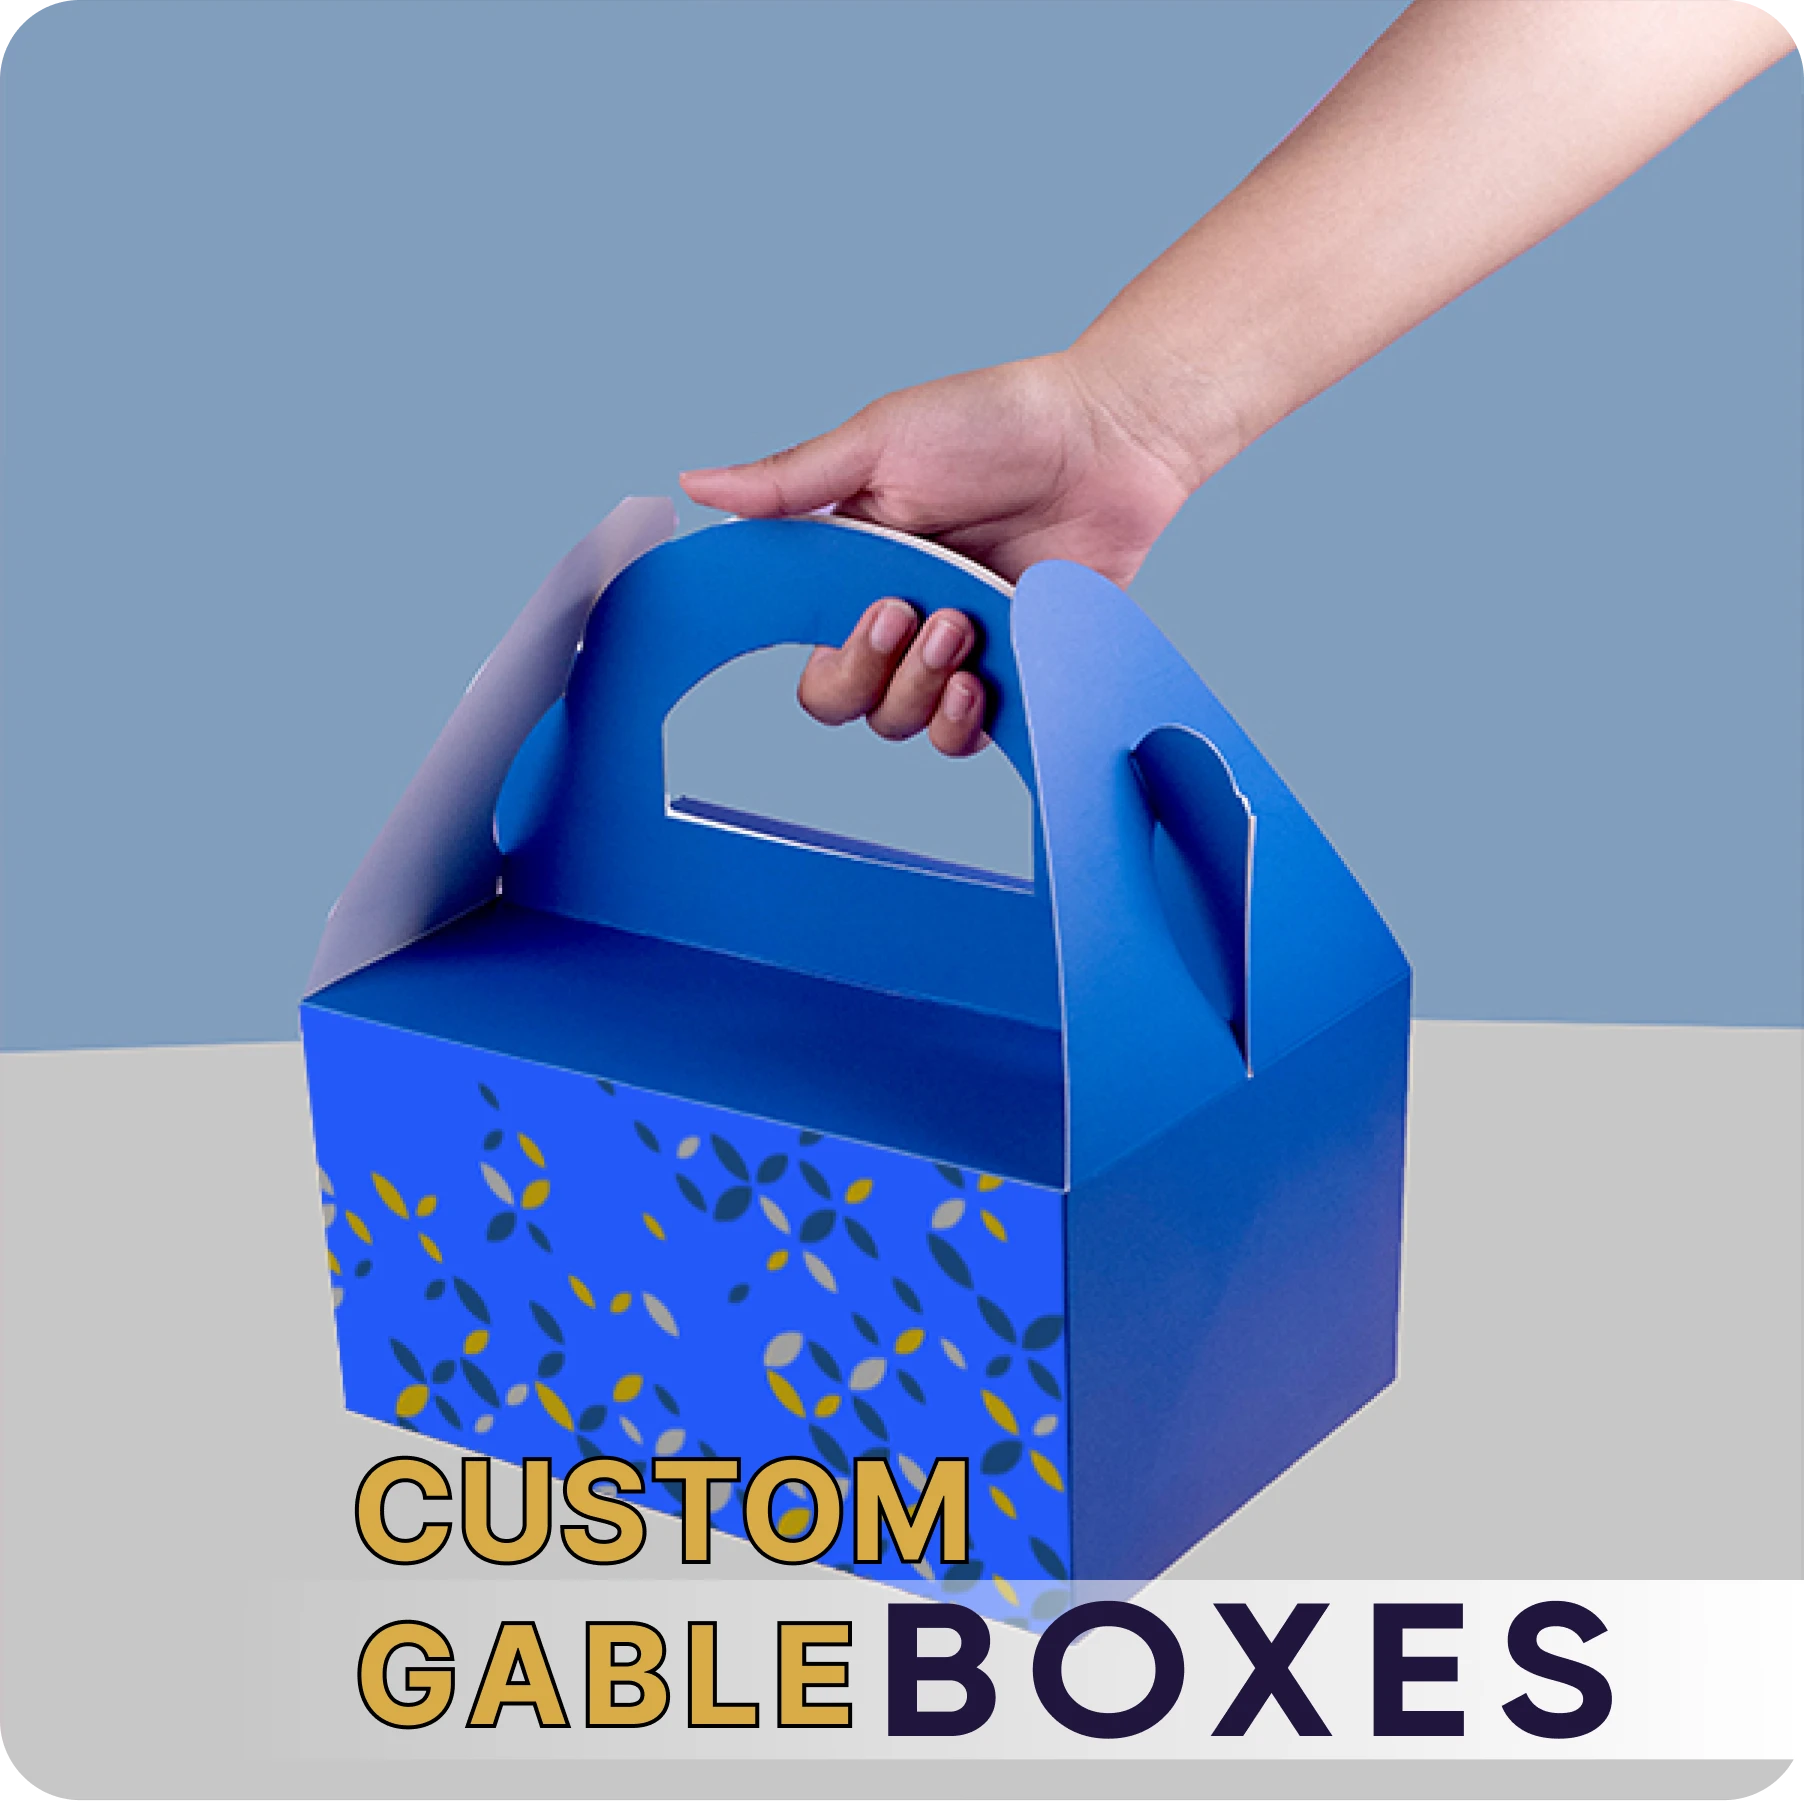 Custom Printed Gable Boxes Make Goods Presentable| The Box Lane